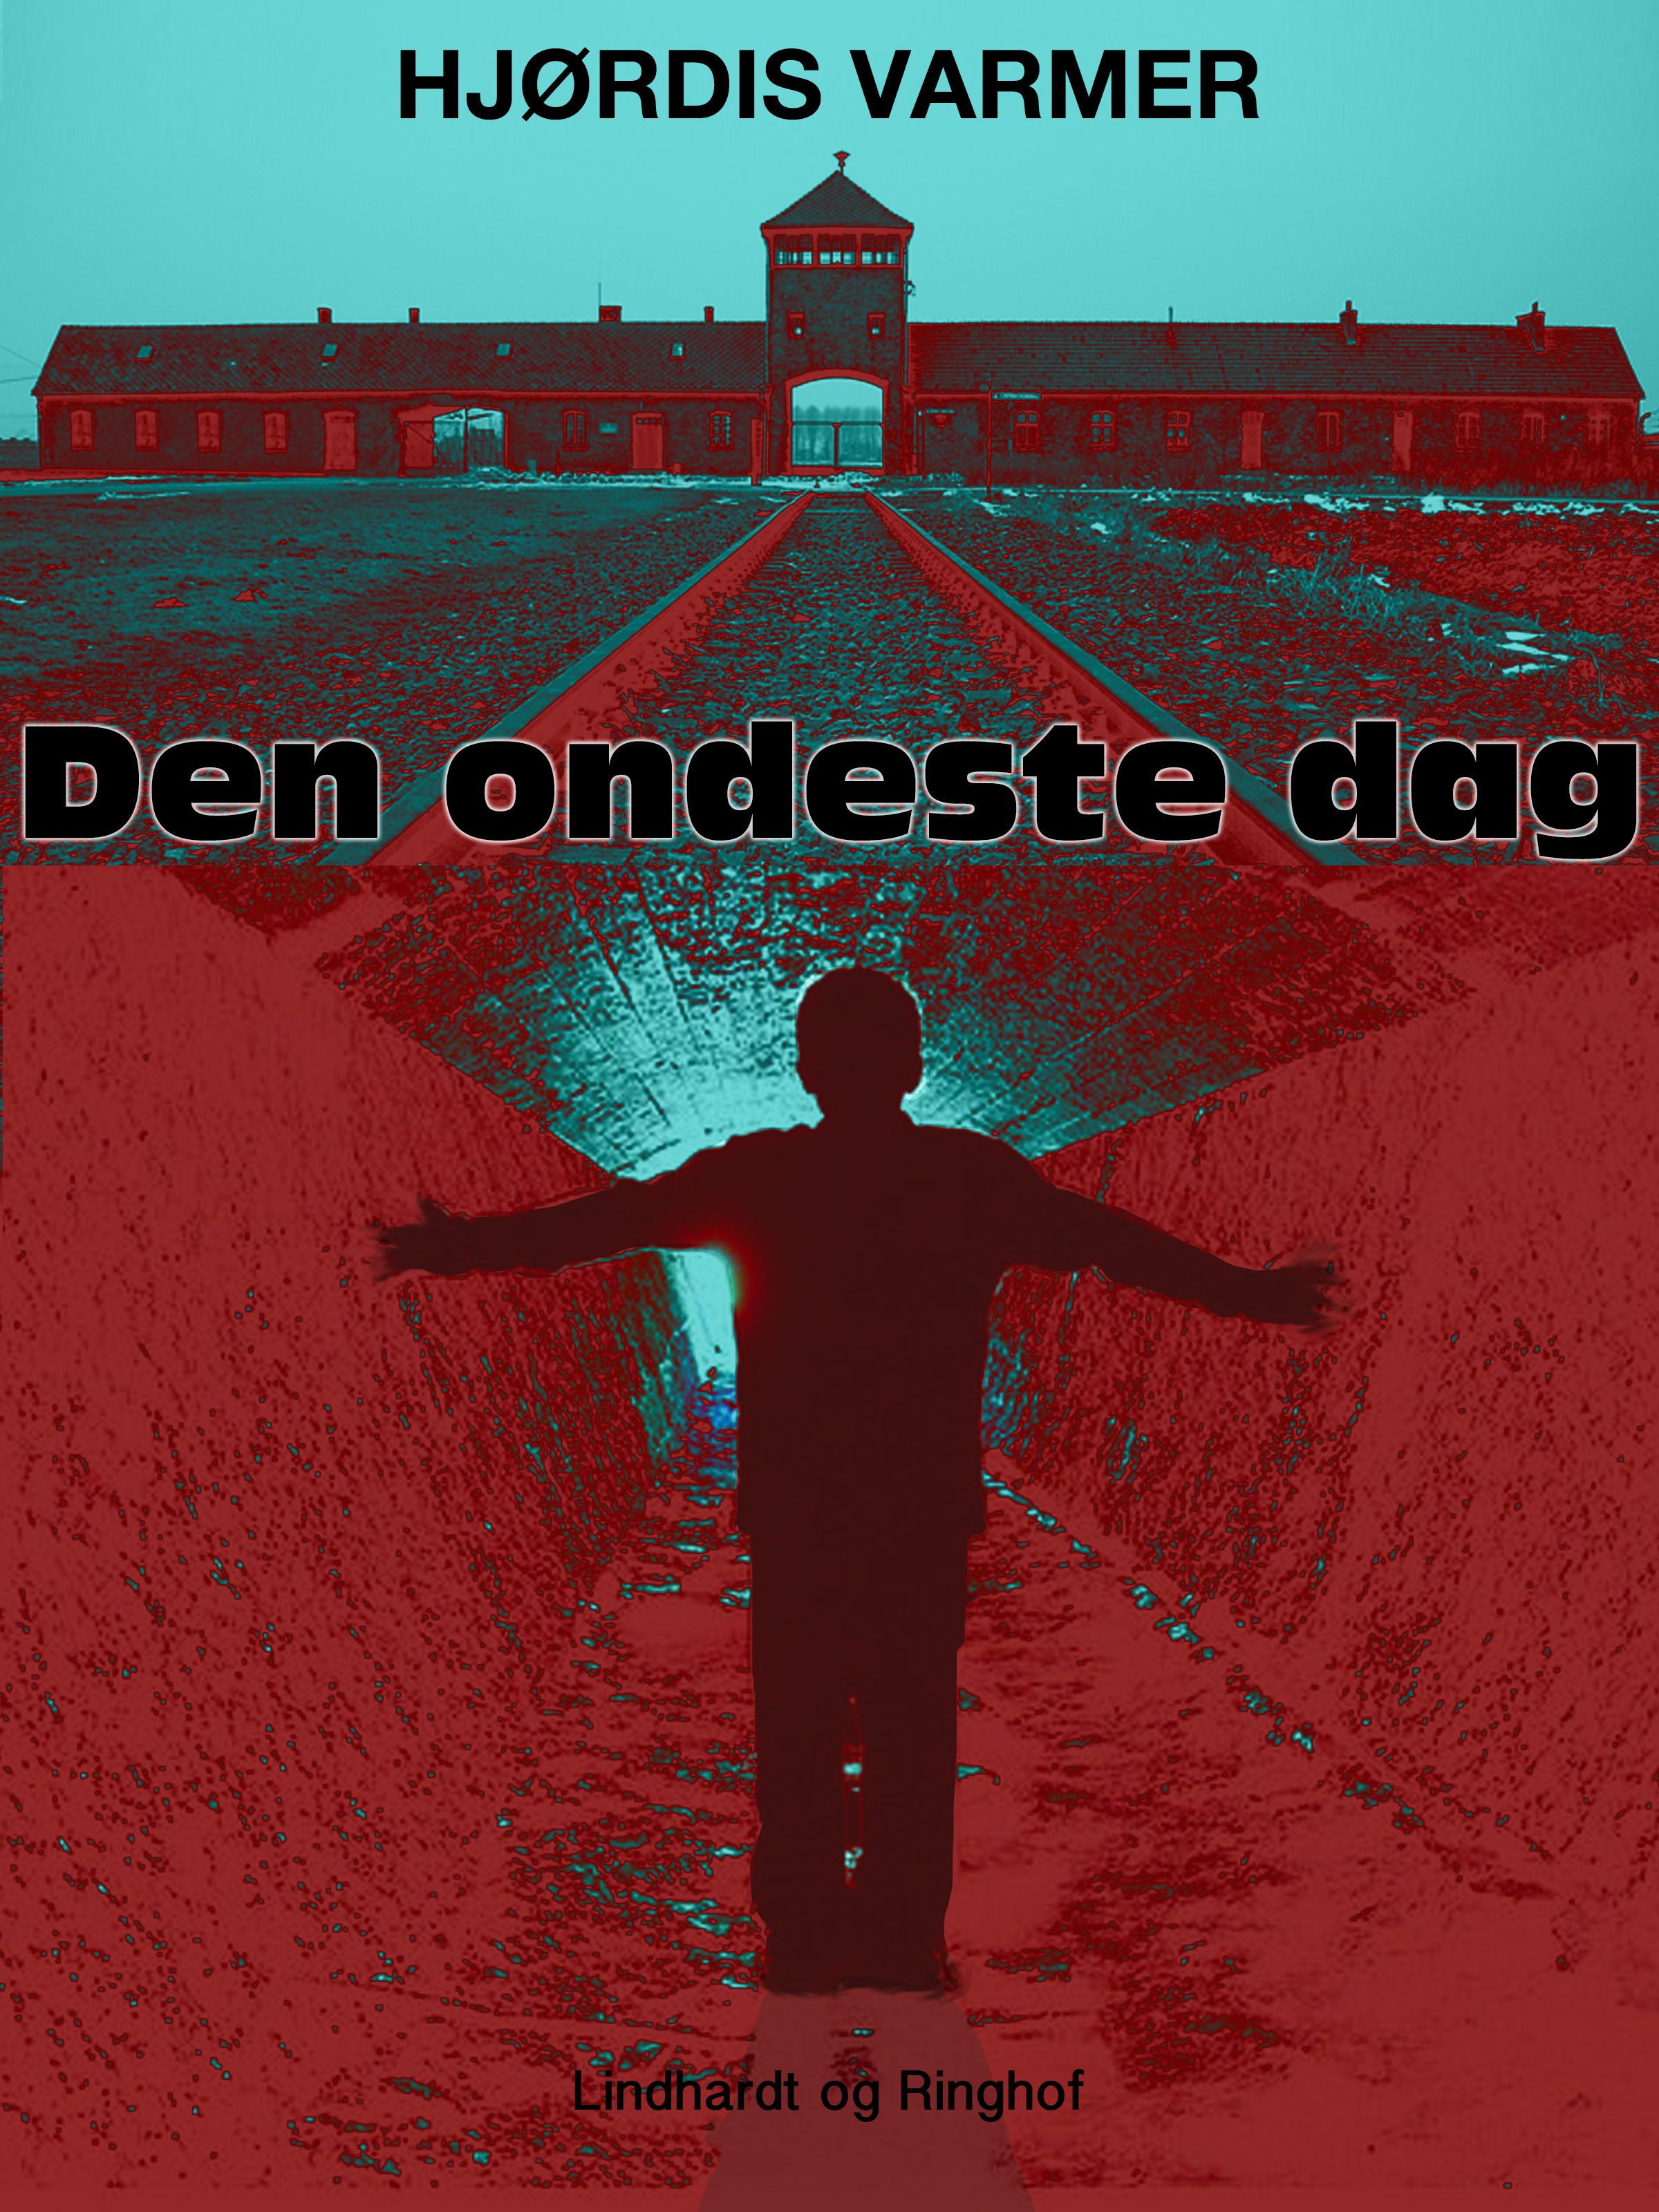 Den ondeste dag, audiobook by Hjørdis Varmer